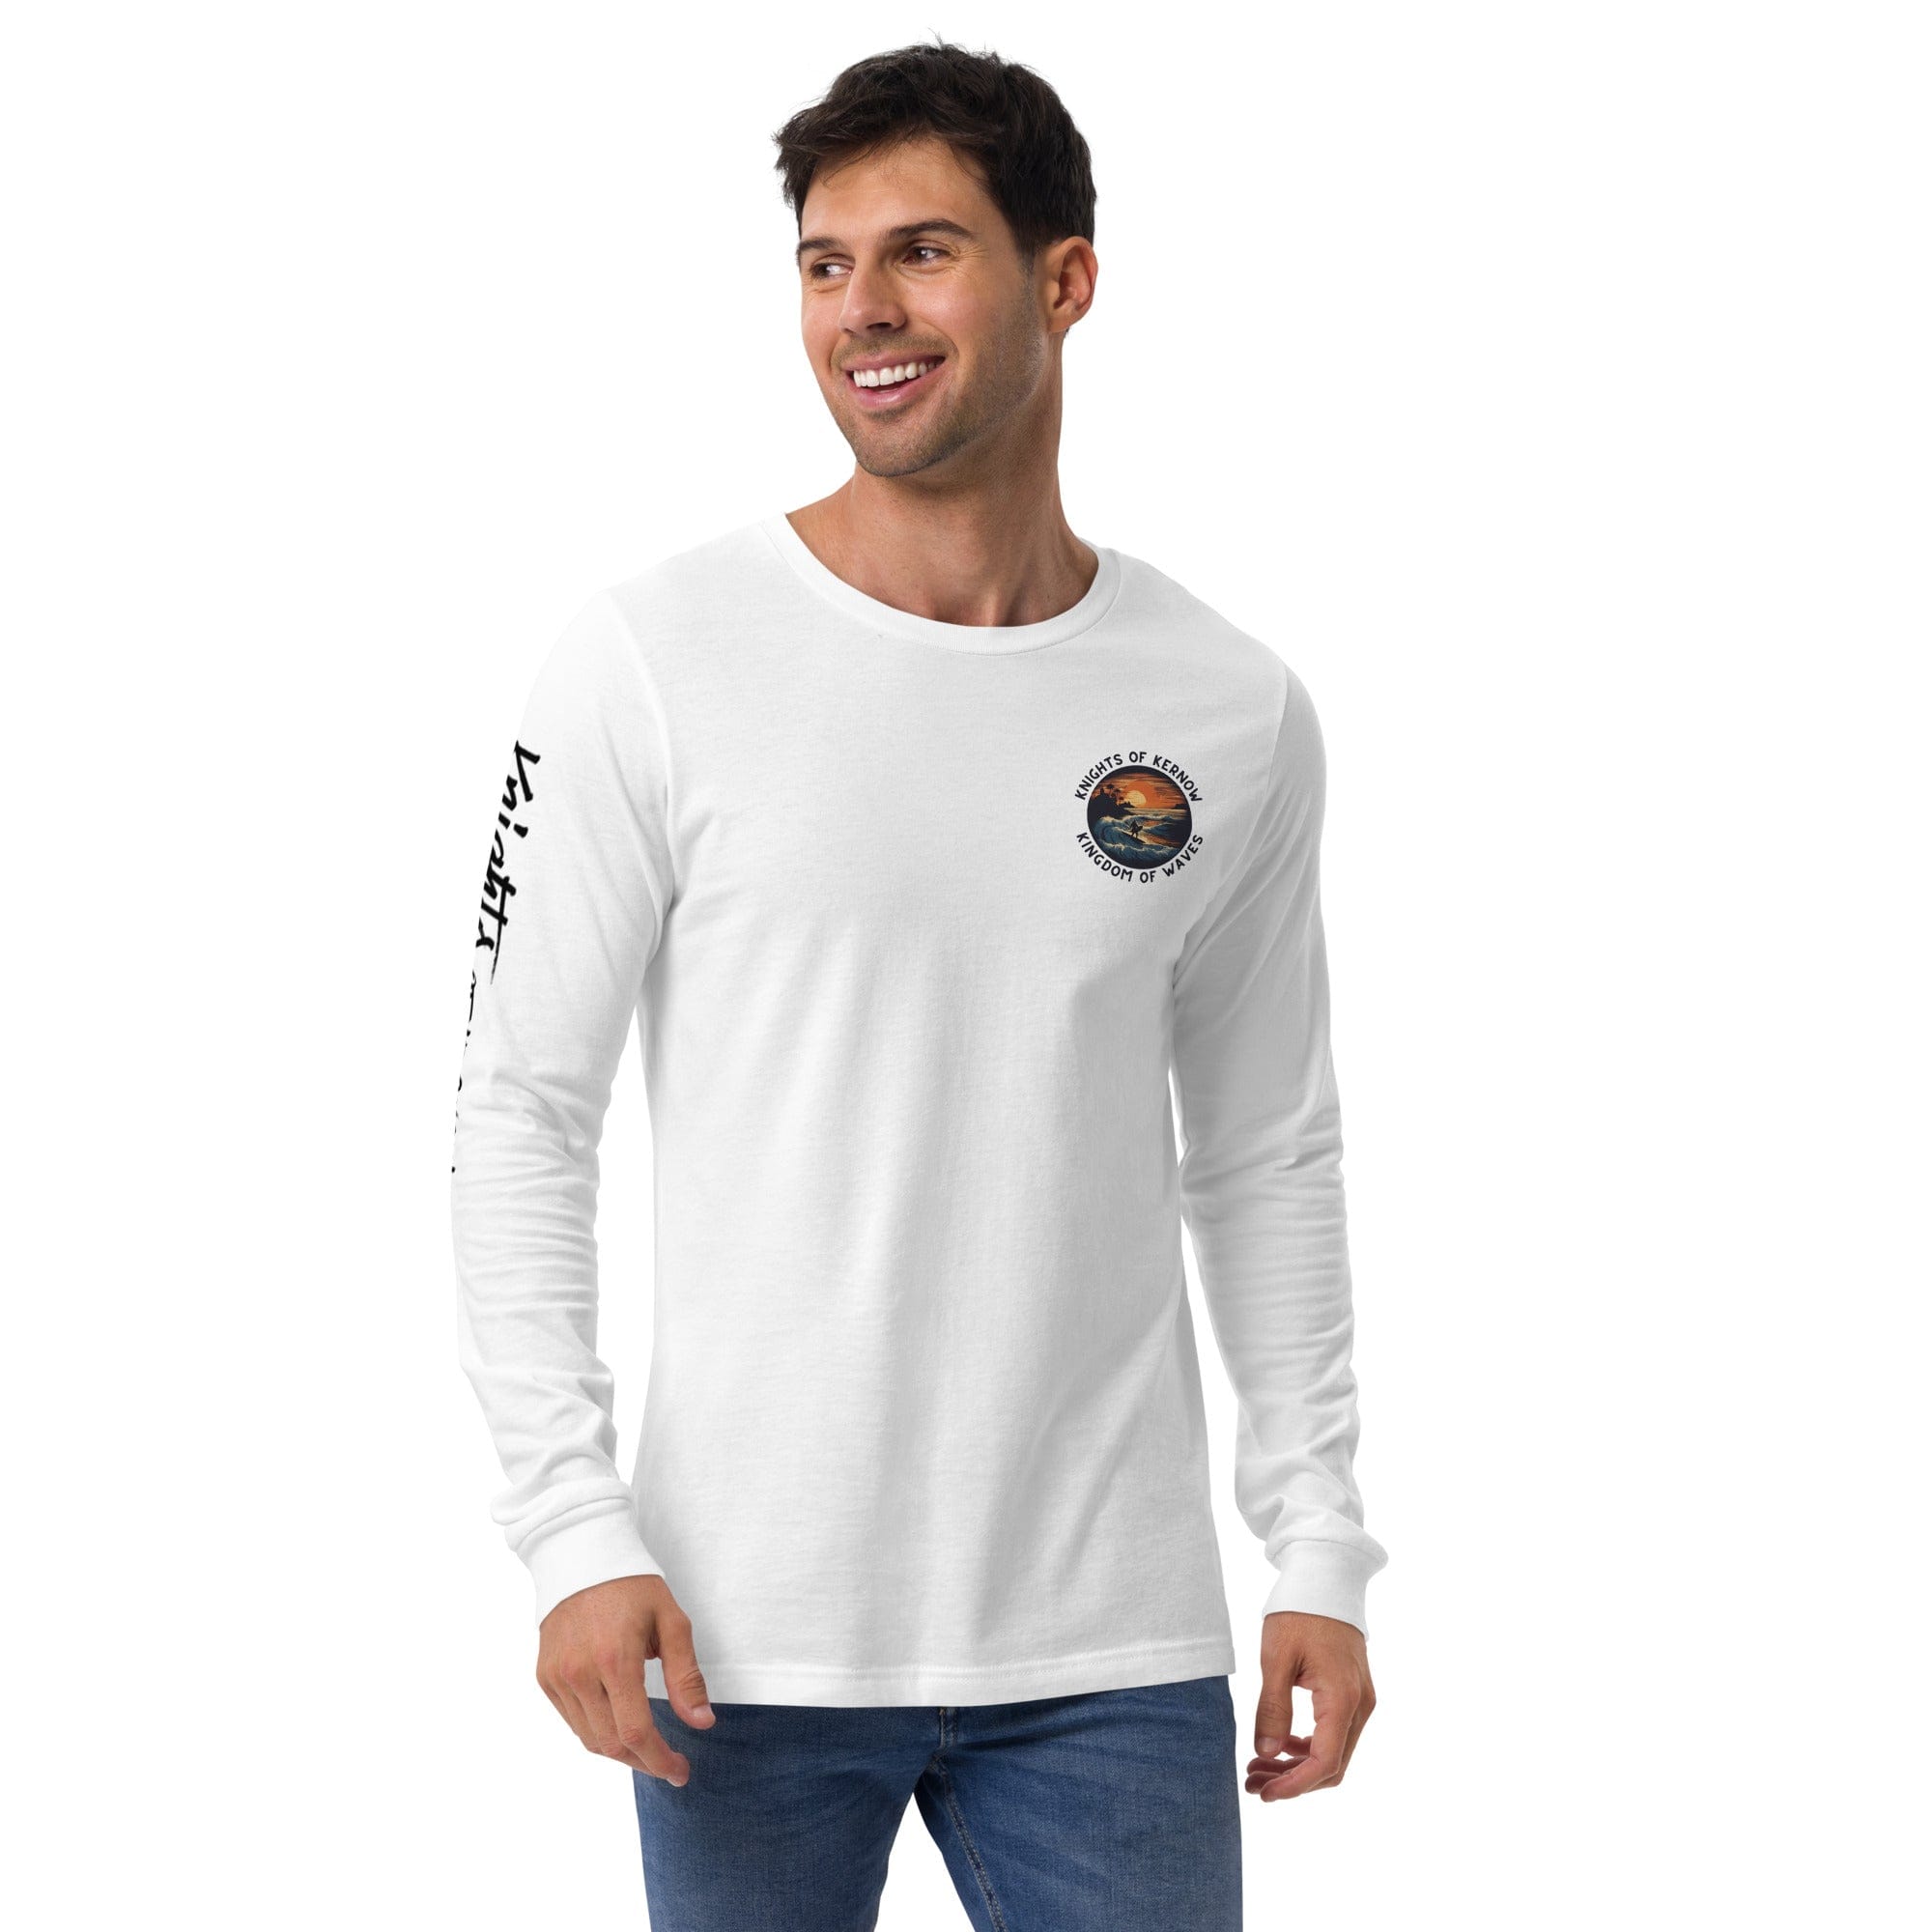 Knights of Kernow Kingdom of Waves Long-Sleeve Surfer Shirt long sleeve shirts Jolly & Goode